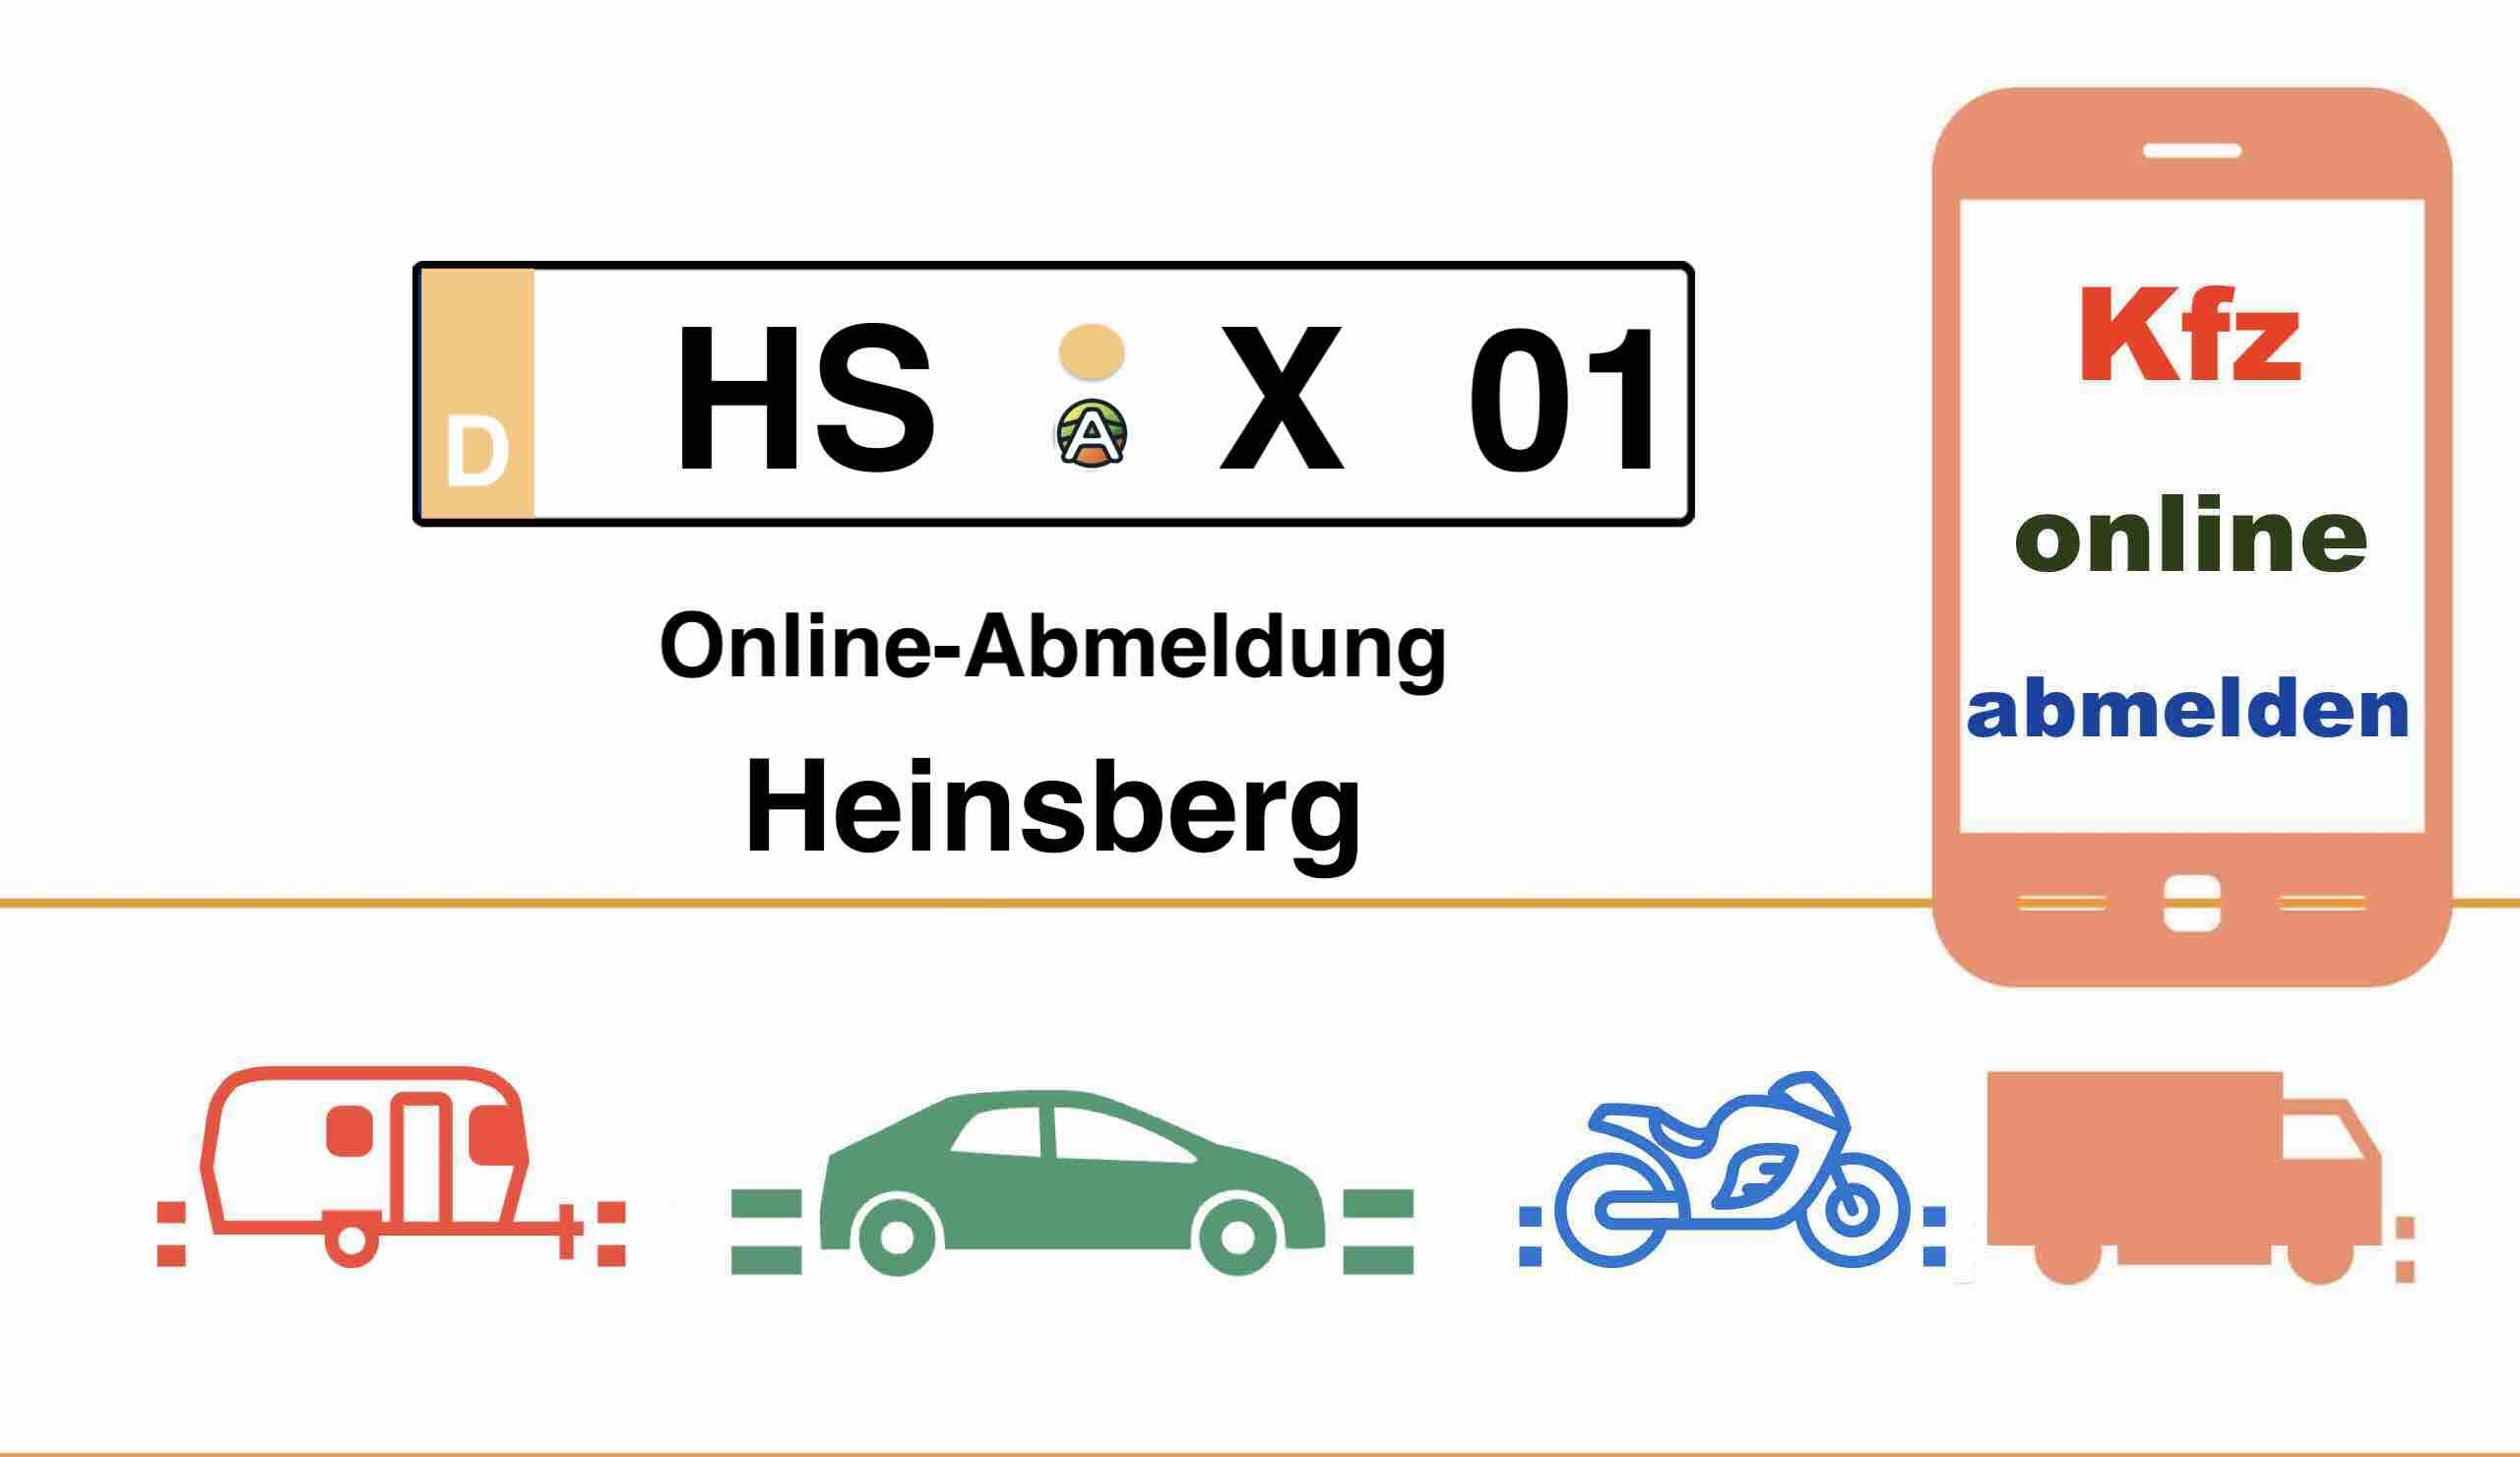 Online-Abmeldung in Heinsberg 